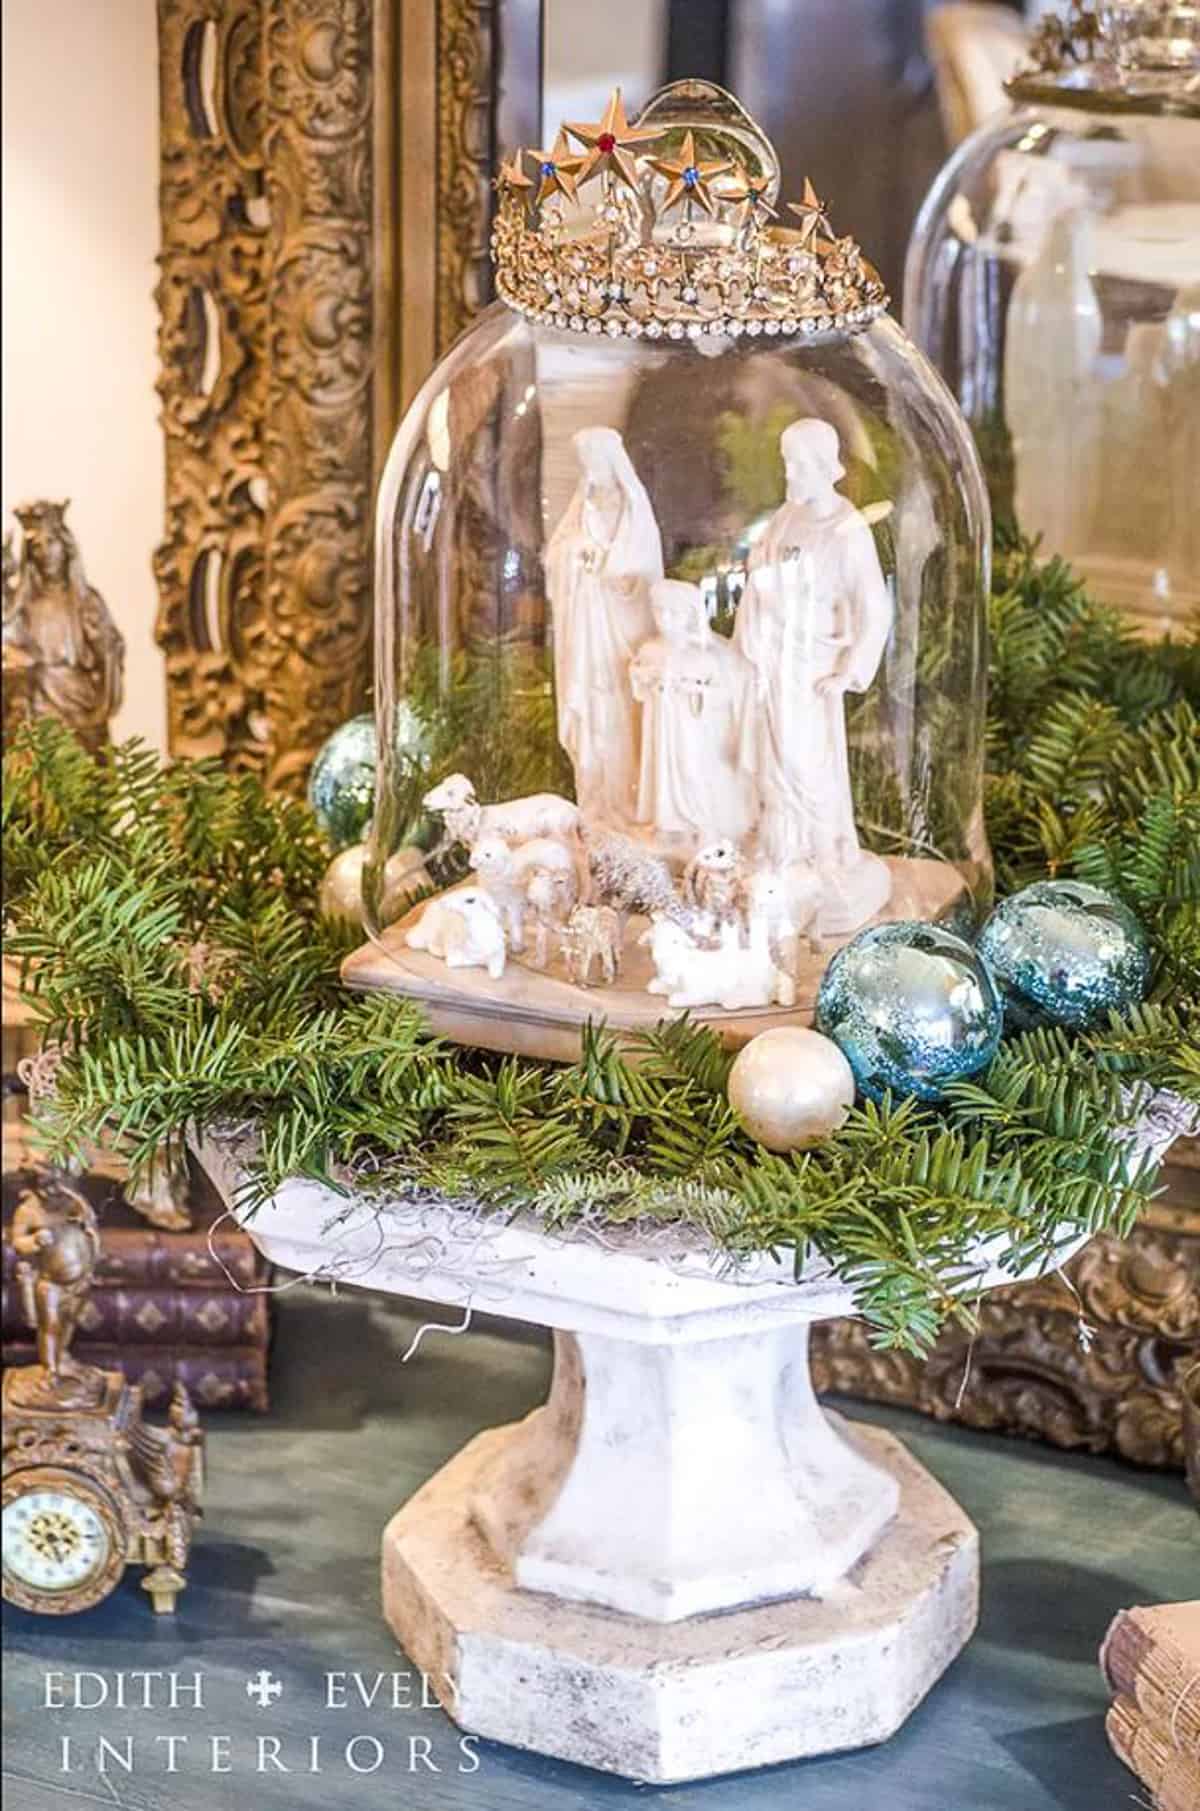 nativity set under a glass cloche on a cake stand